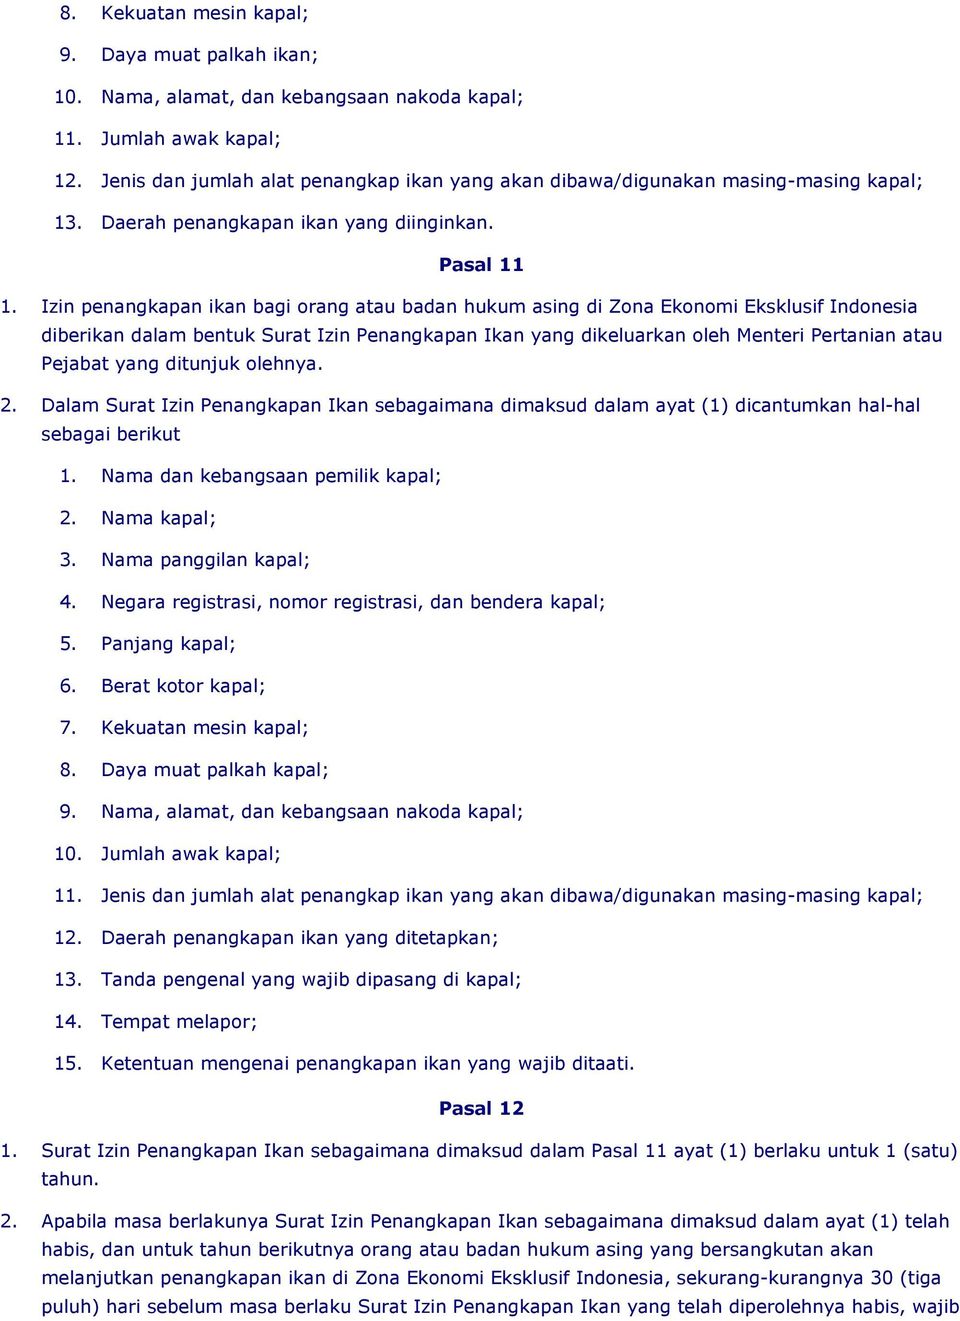 Izin penangkapan ikan bagi orang atau badan hukum asing di Zona Ekonomi Eksklusif Indonesia diberikan dalam bentuk Surat Izin Penangkapan Ikan yang dikeluarkan oleh Menteri Pertanian atau Pejabat